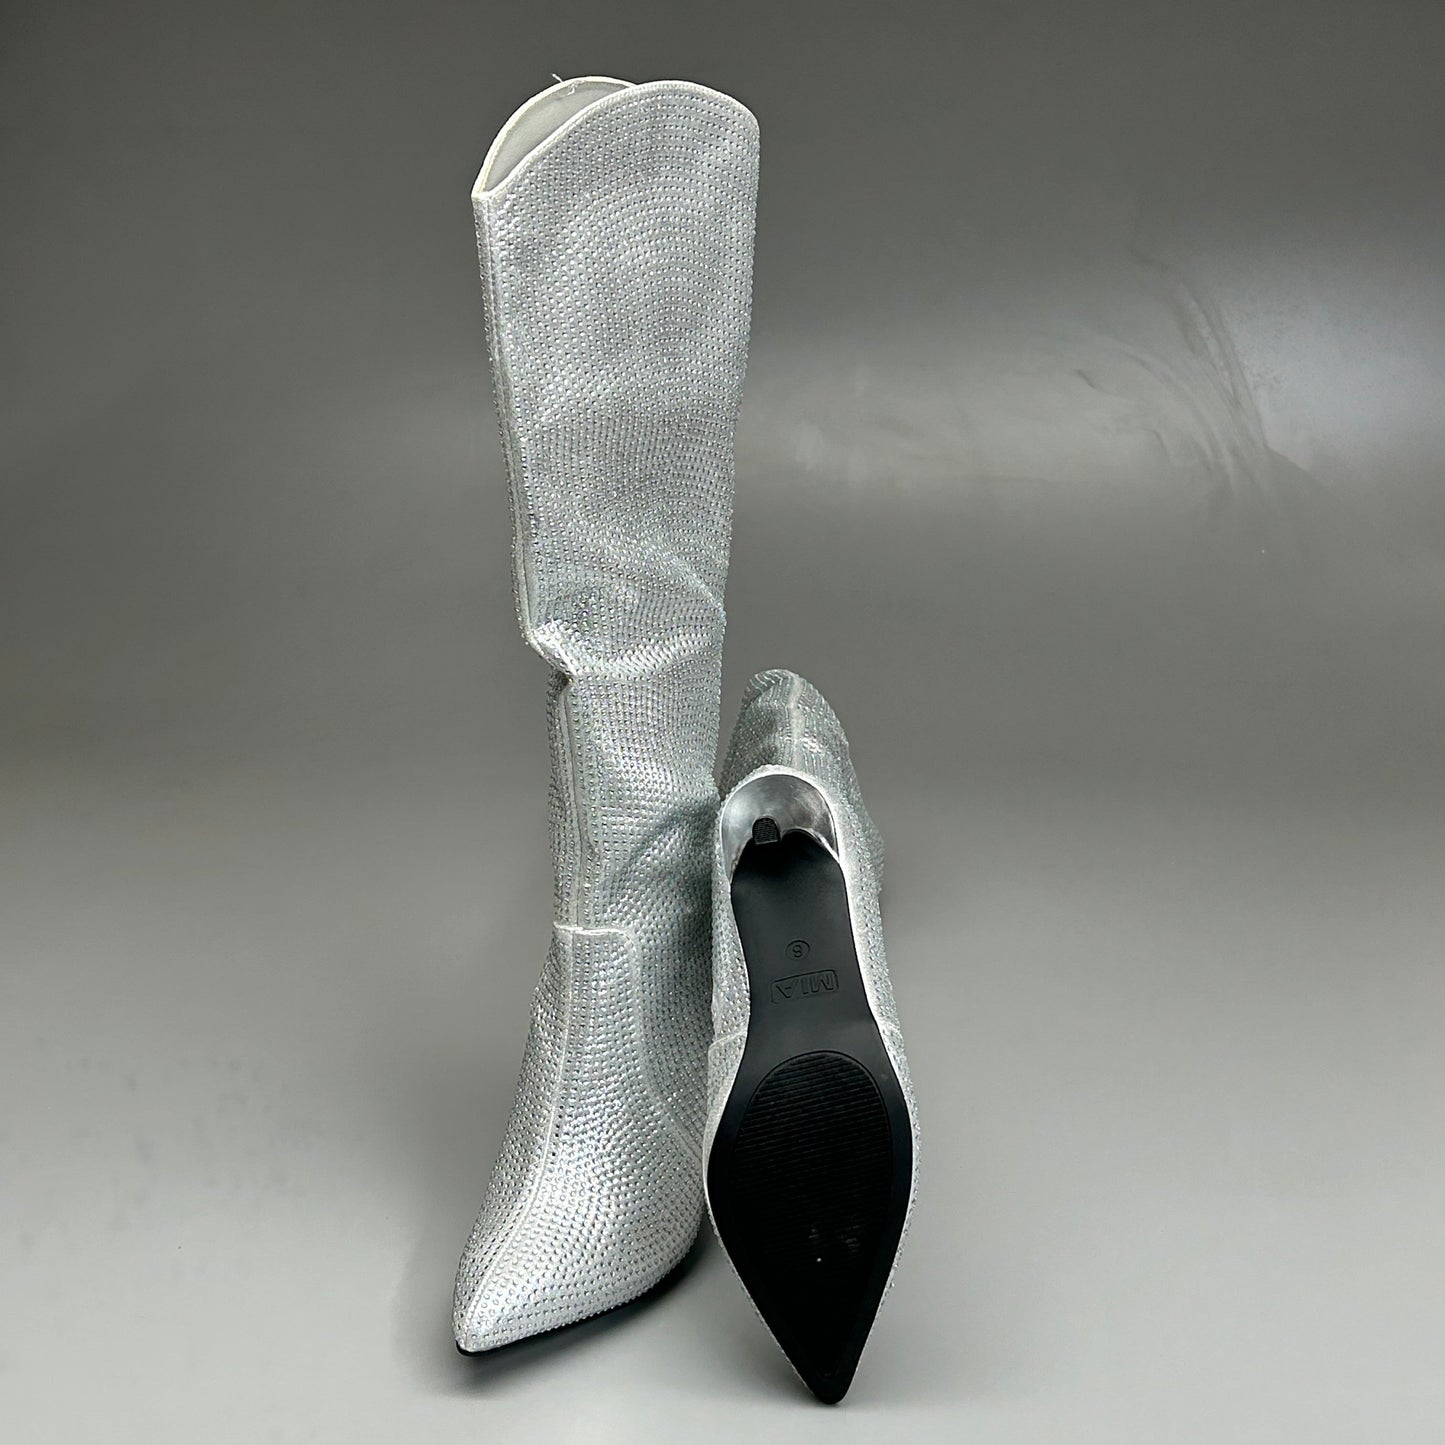 MIA Mackynzie Silver Stone Tall Heeled Boots Sz 8.5M Q100302